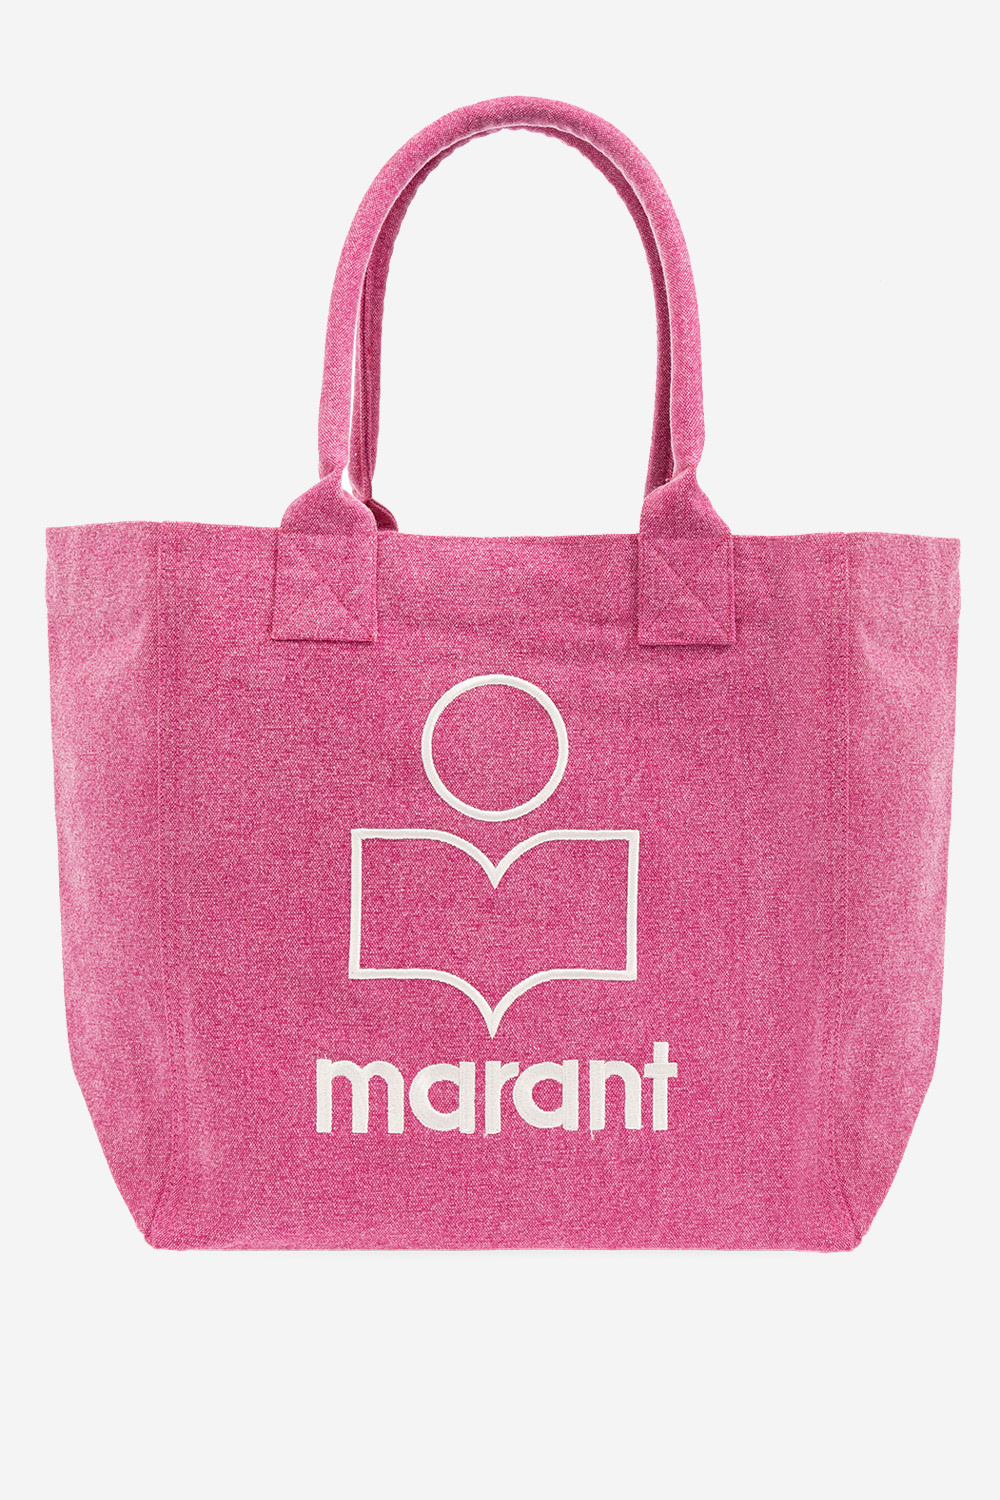 Isabel Marant Tote bag Pink